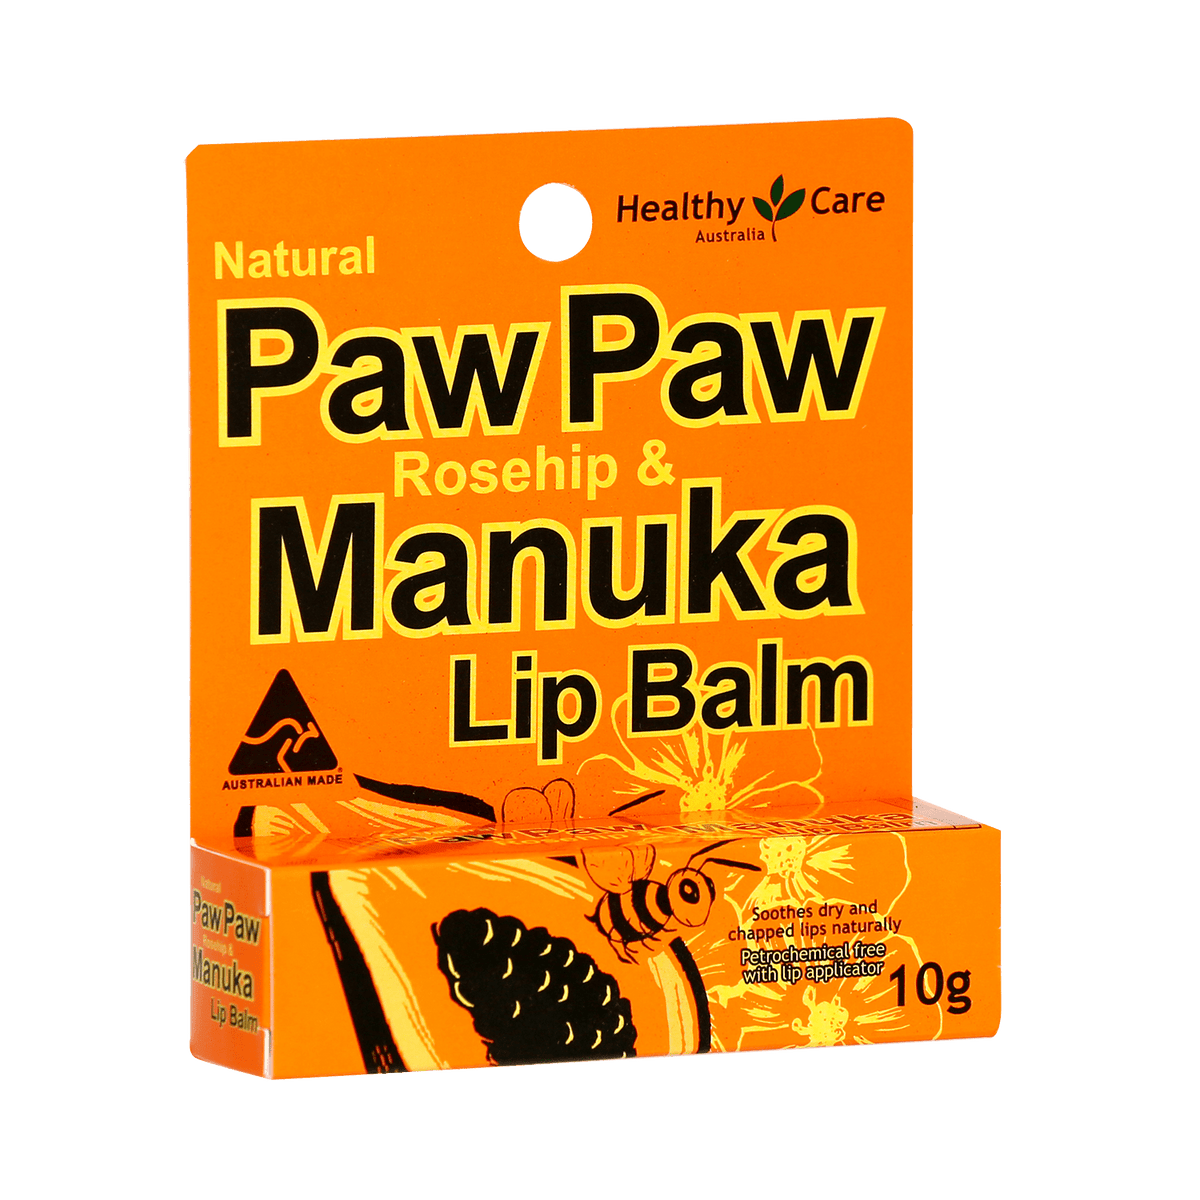 Paw Paw Rosehip & Manuka Lip Balm 10g in Box Packaging-Healthy Care Australia